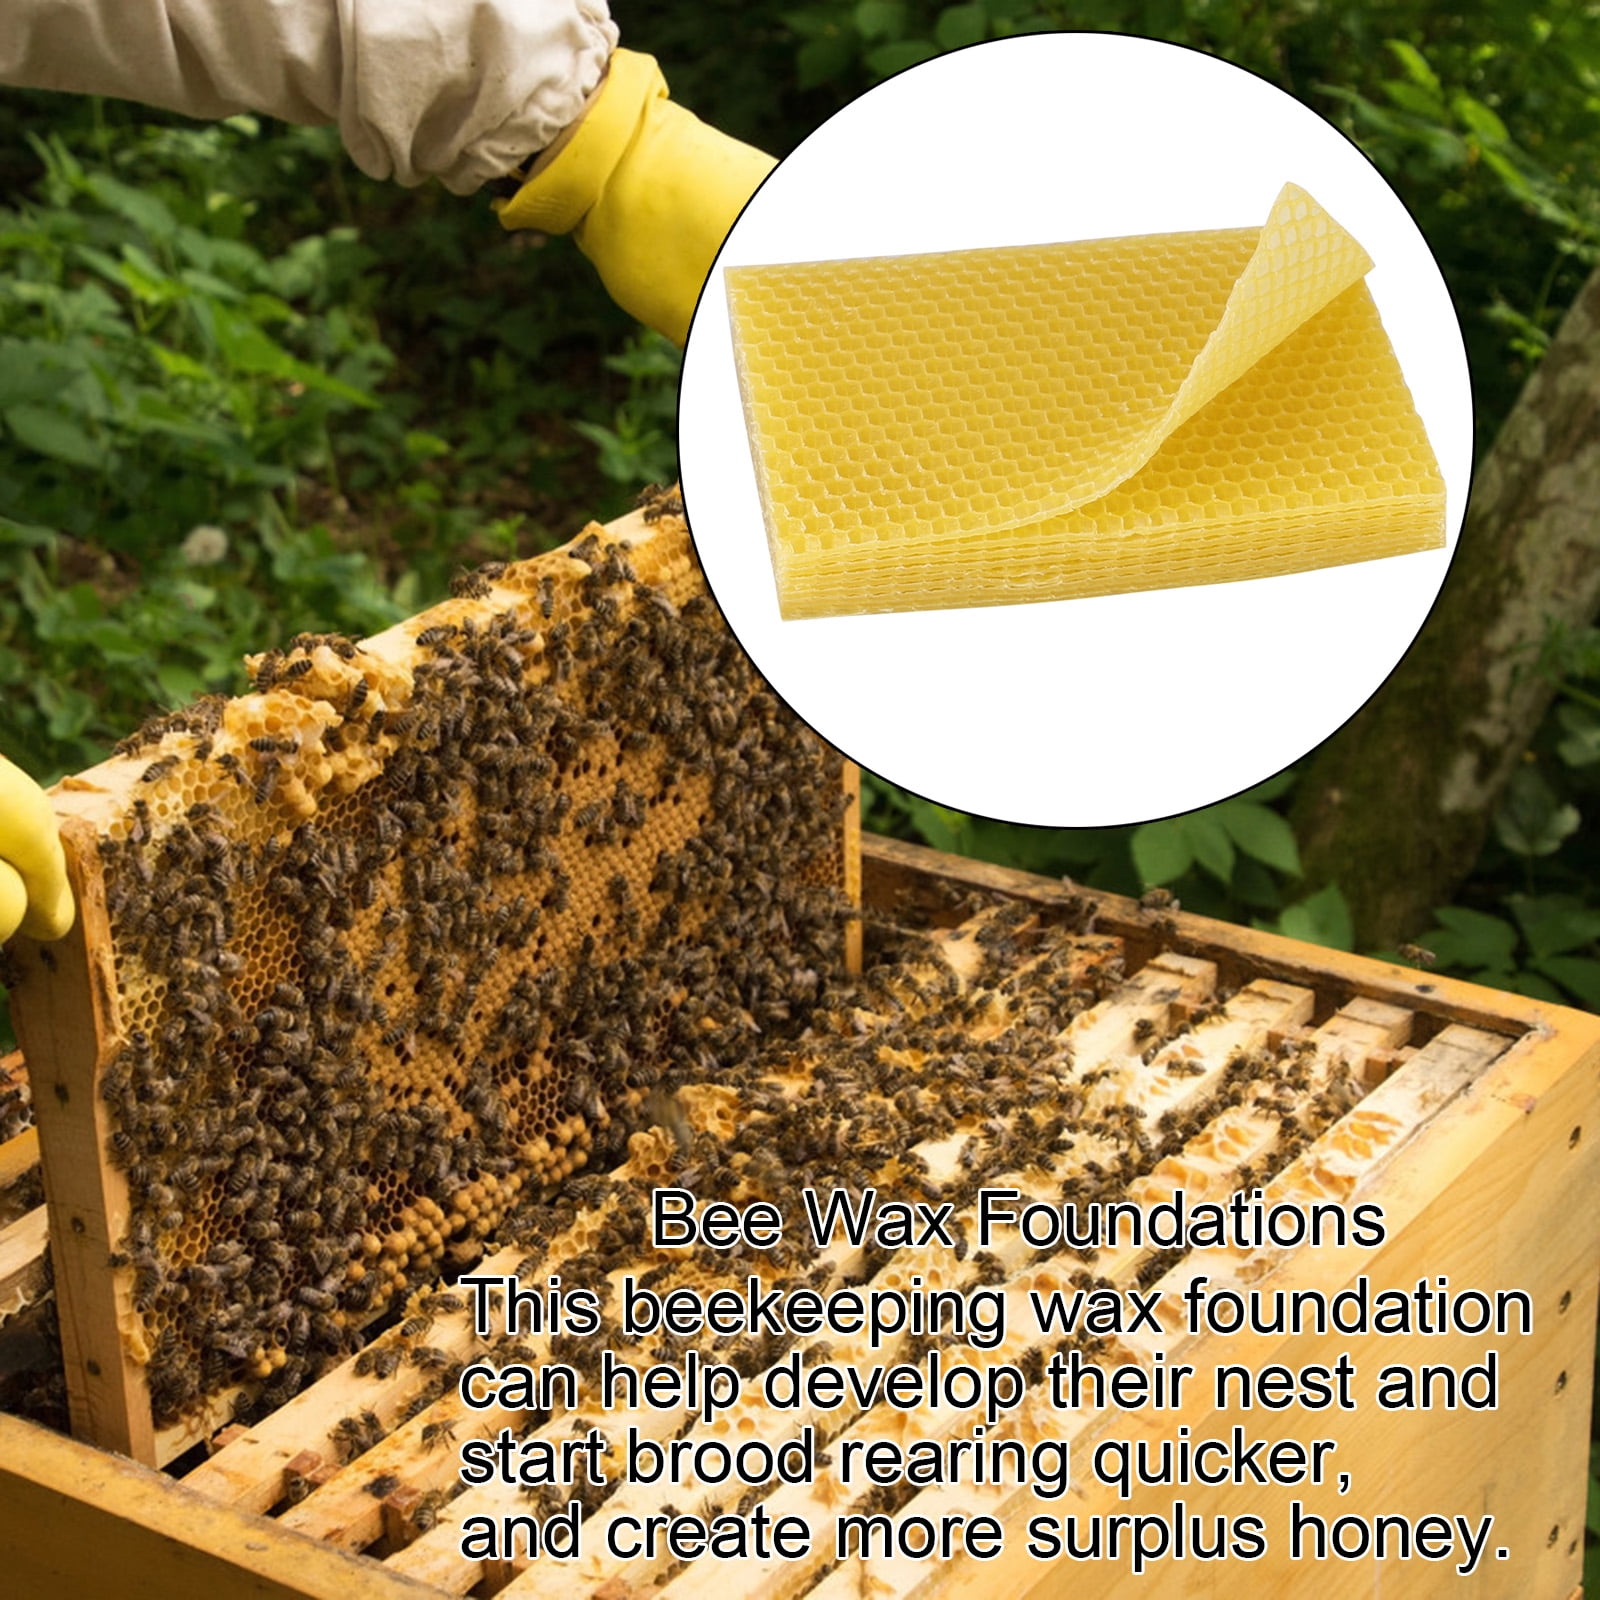 10Pcs Beekeeping Honeycomb Foundation Wax Frames Honey Hive Equipment Tool Set 